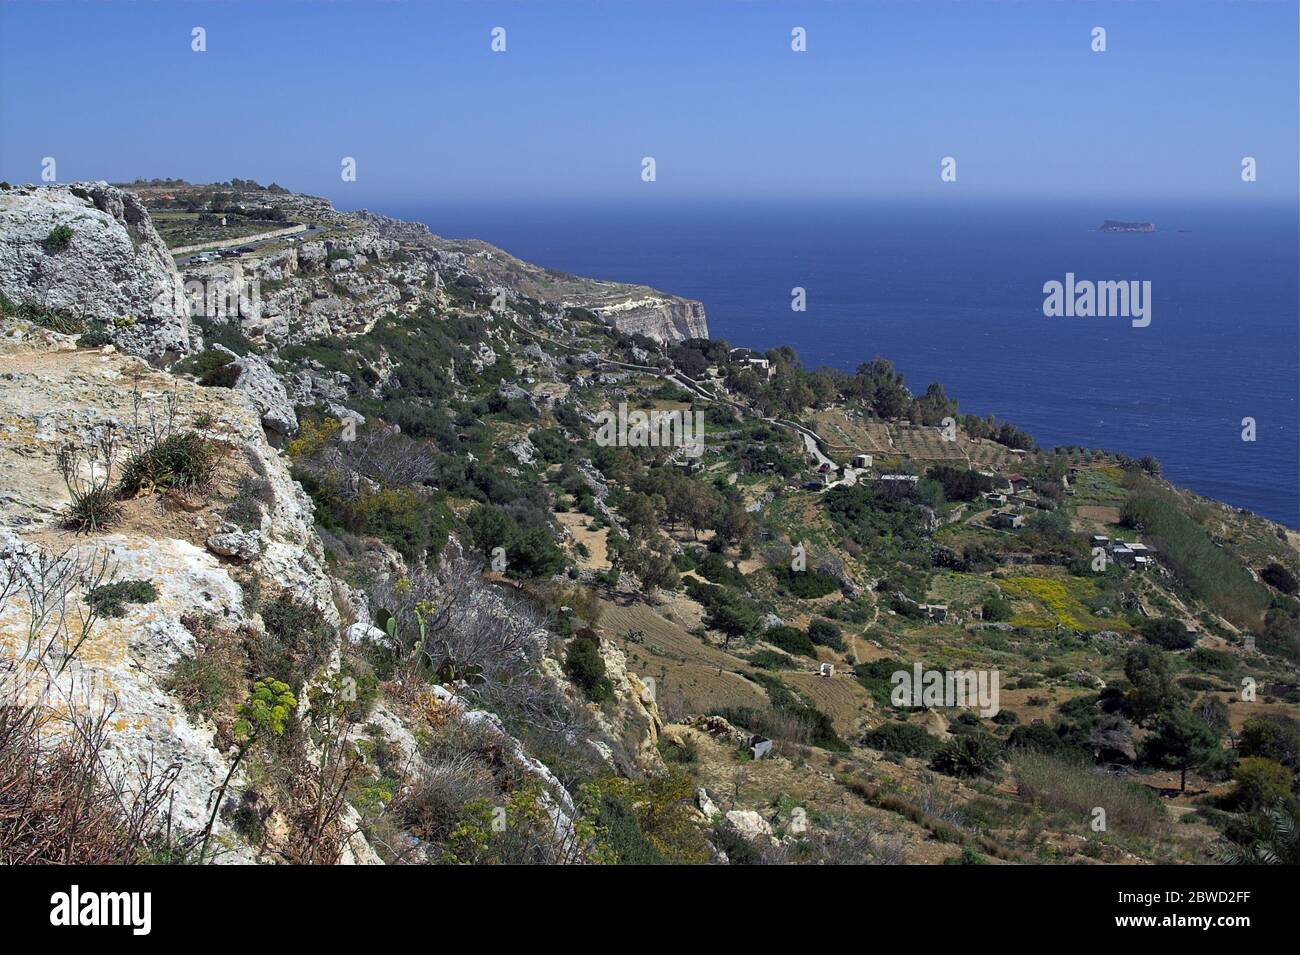 Malta, rocky, seaside landscape. Felsige Küstenlandschaft. Rocoso, paisaje costero. Skalisty, nadmorski krajobraz. 馬耳他，岩石，海邊風景。 Stock Photo